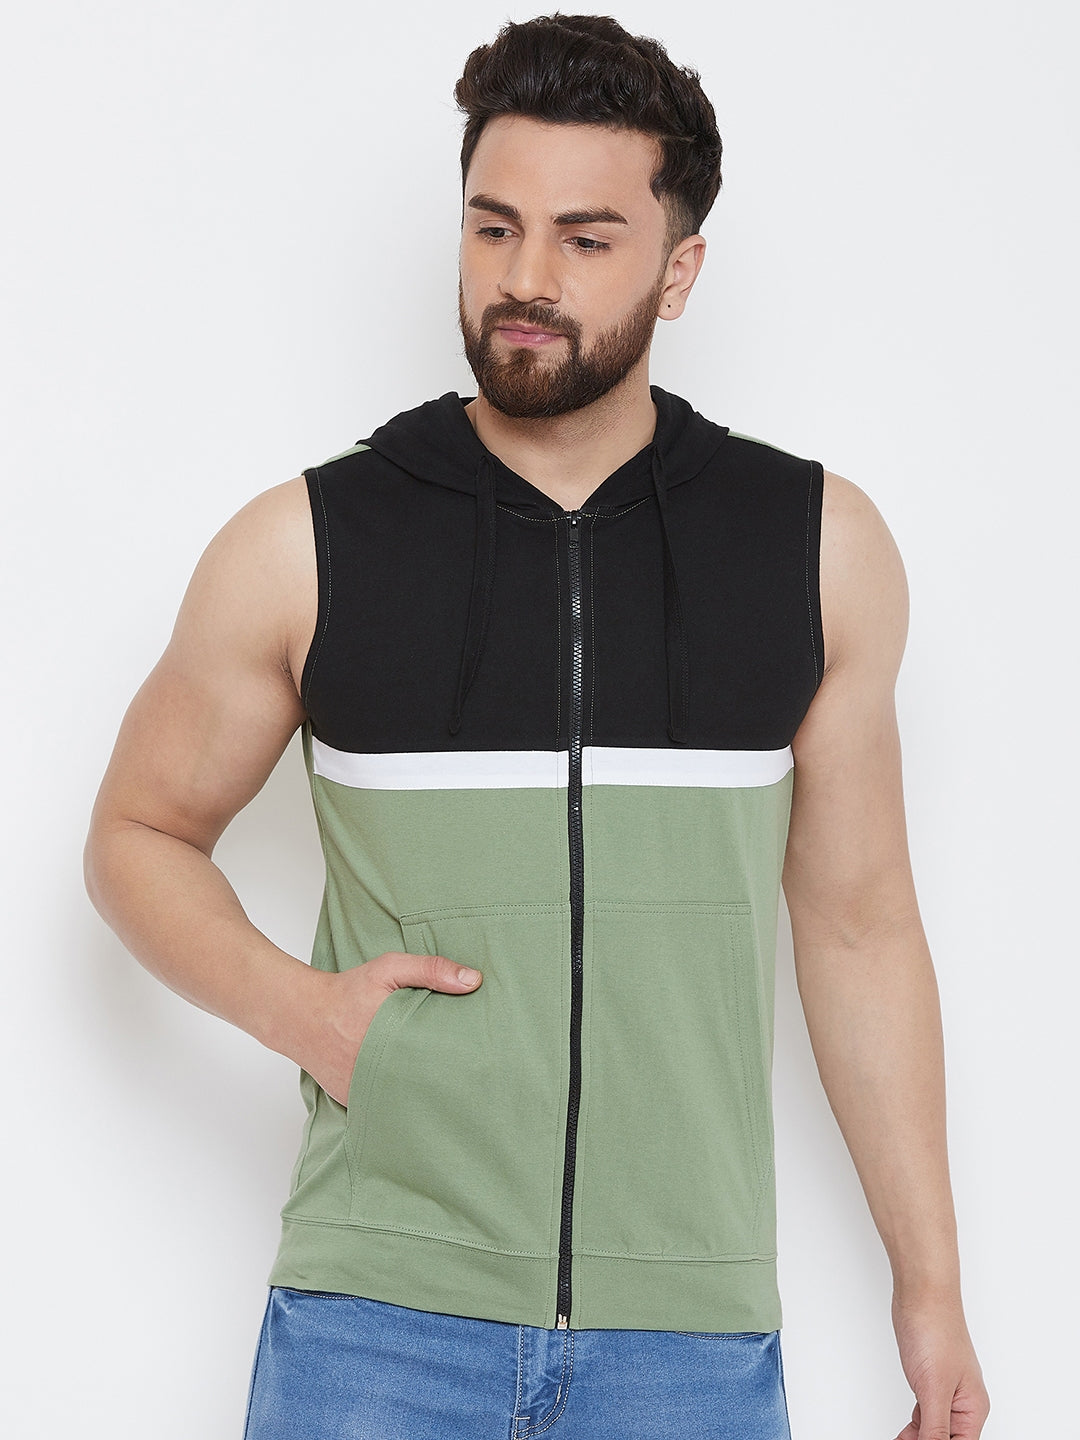 Moss Green/Black/White Sleeveless Hooded Zipper T-shirt Jacket